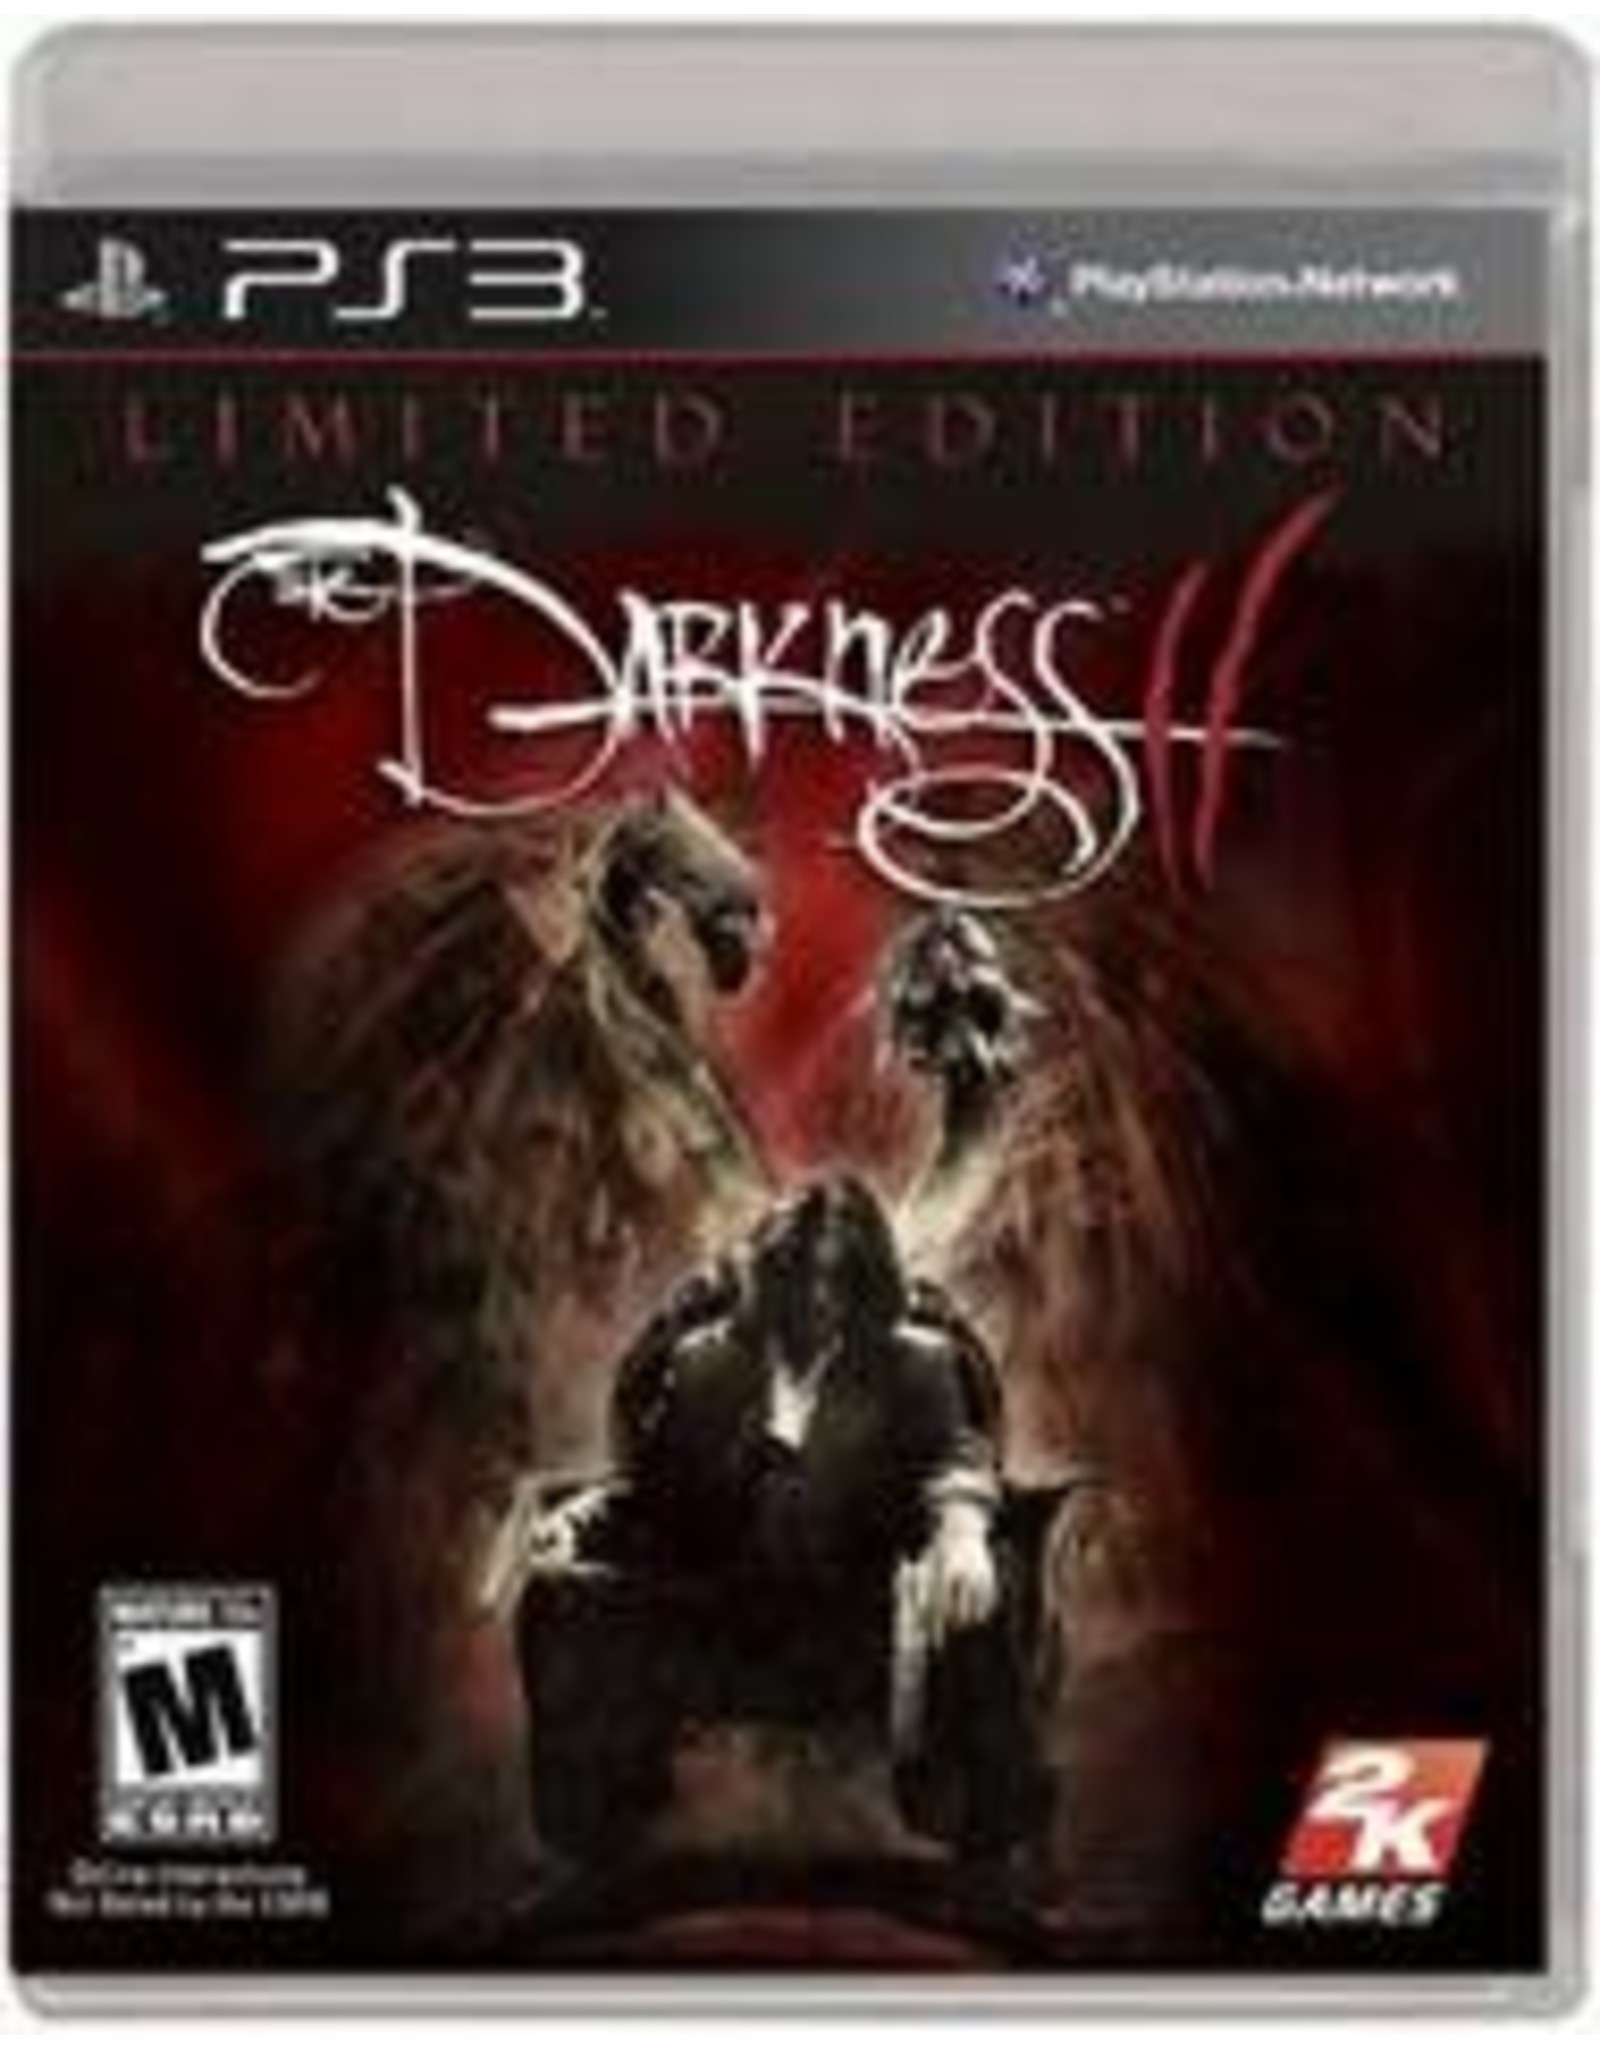 Playstation 3 Darkness II, The: Limited Edition (CIB, No DLC)